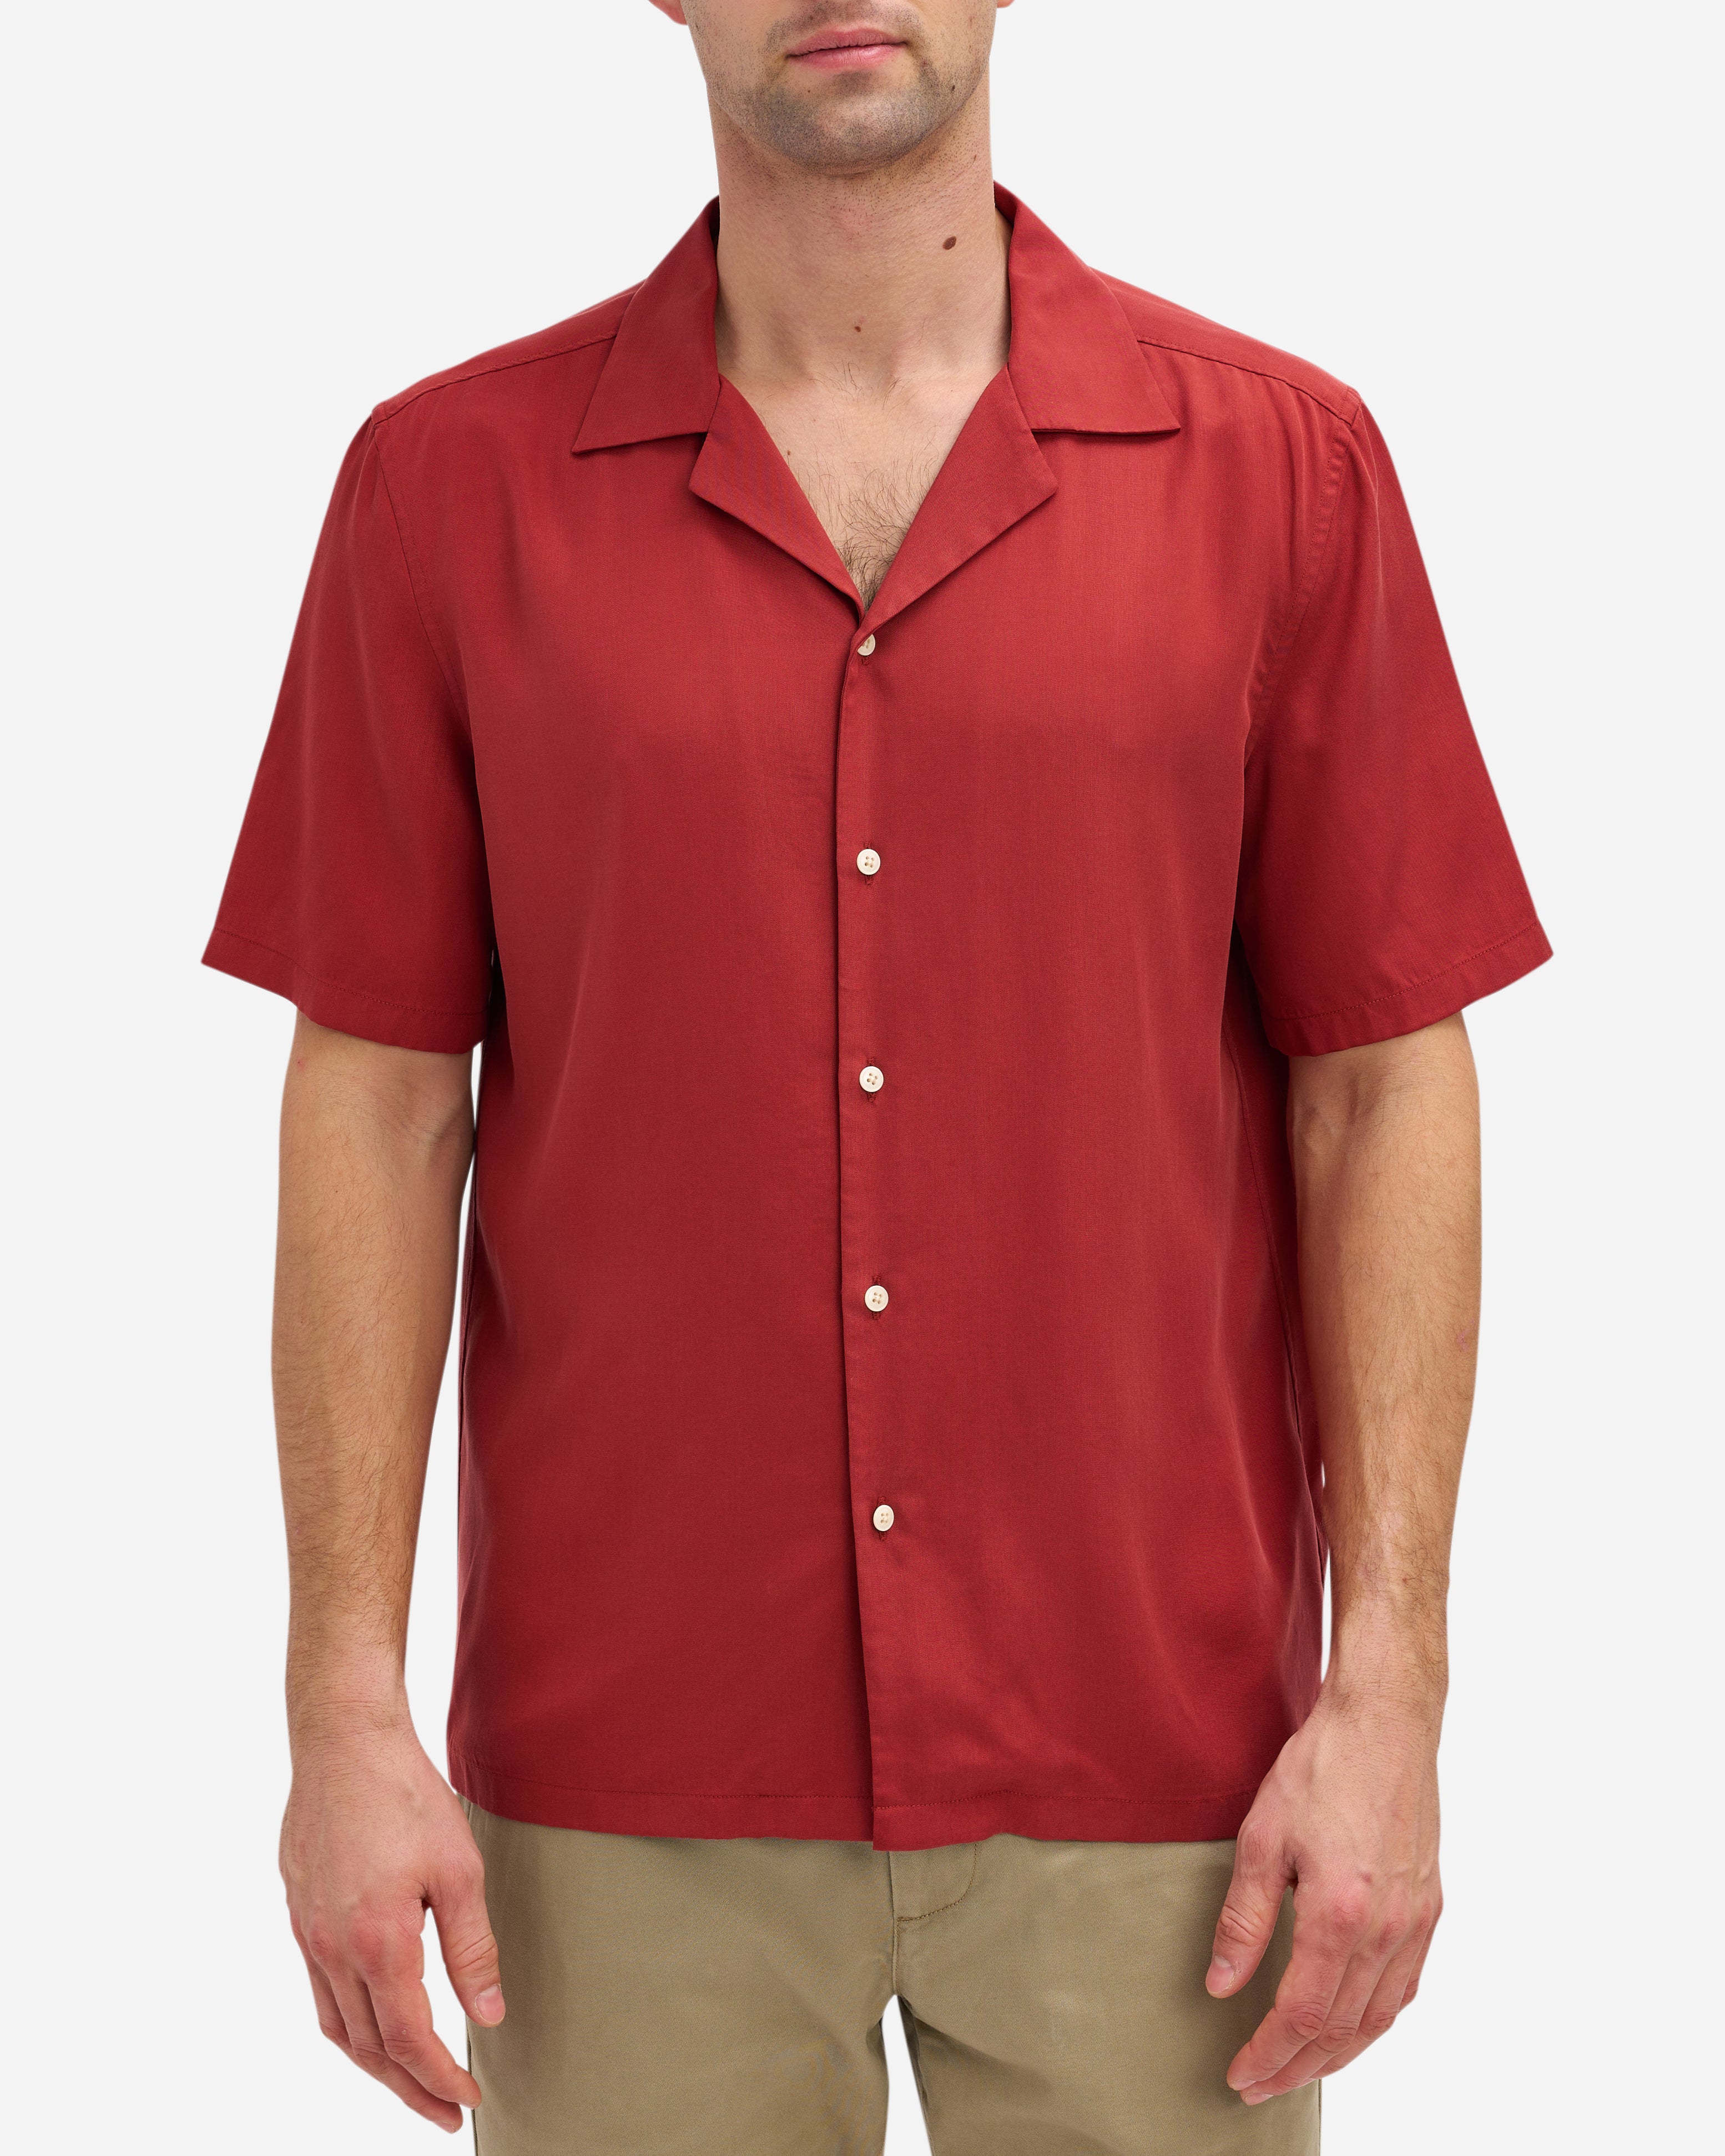 Russet Rockaway Tencel Shirt Men's O.N.S SS23